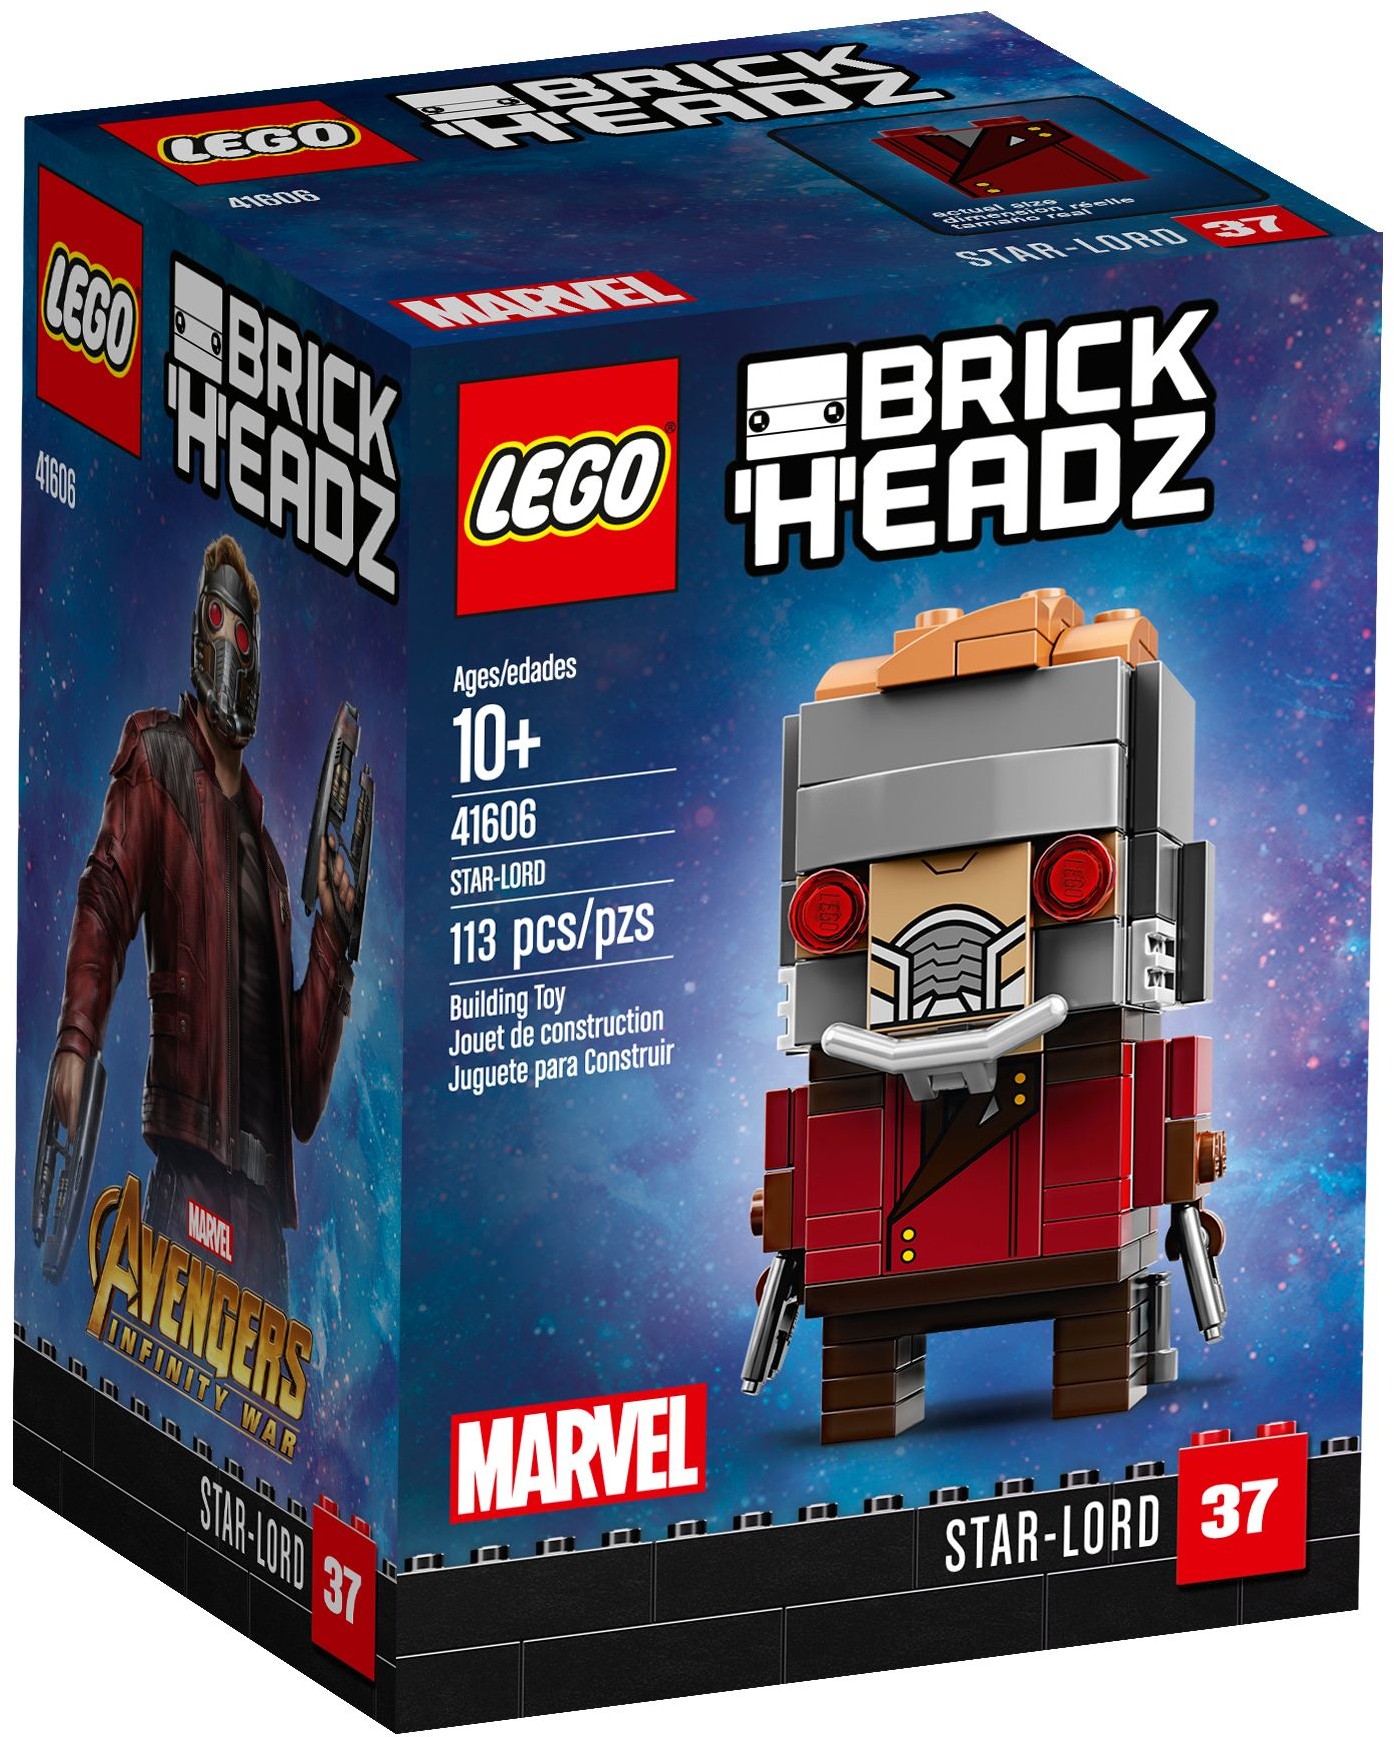 41606 Star-Lord Brick Headz